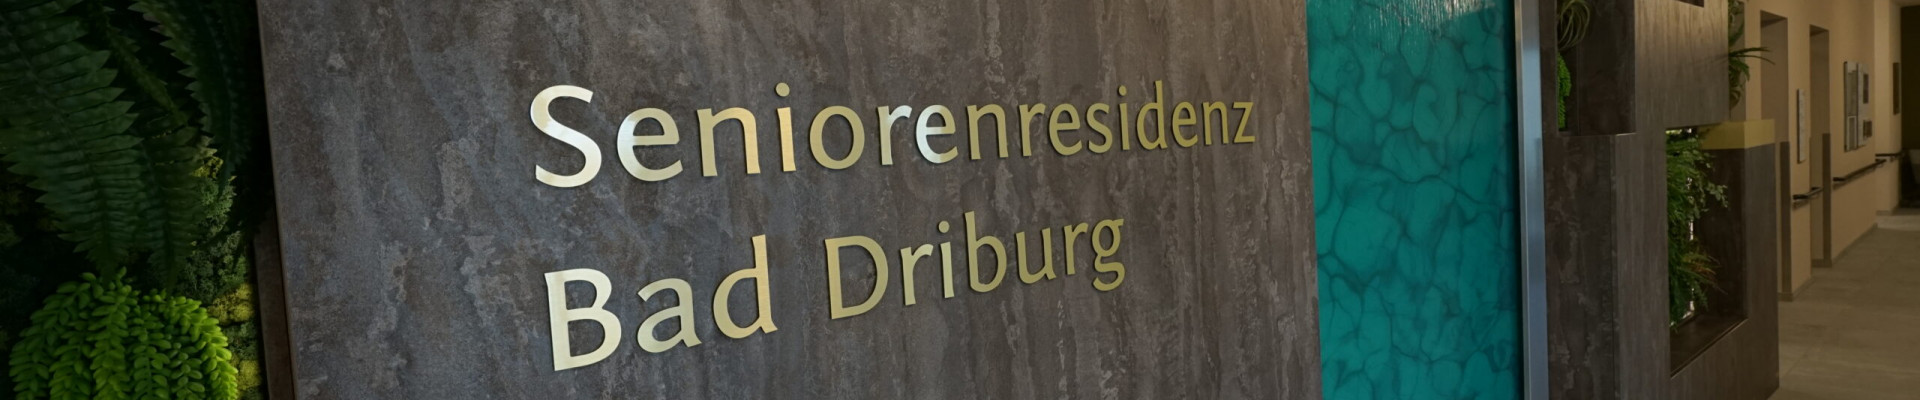 Seniorenresidenz Bad Driburg